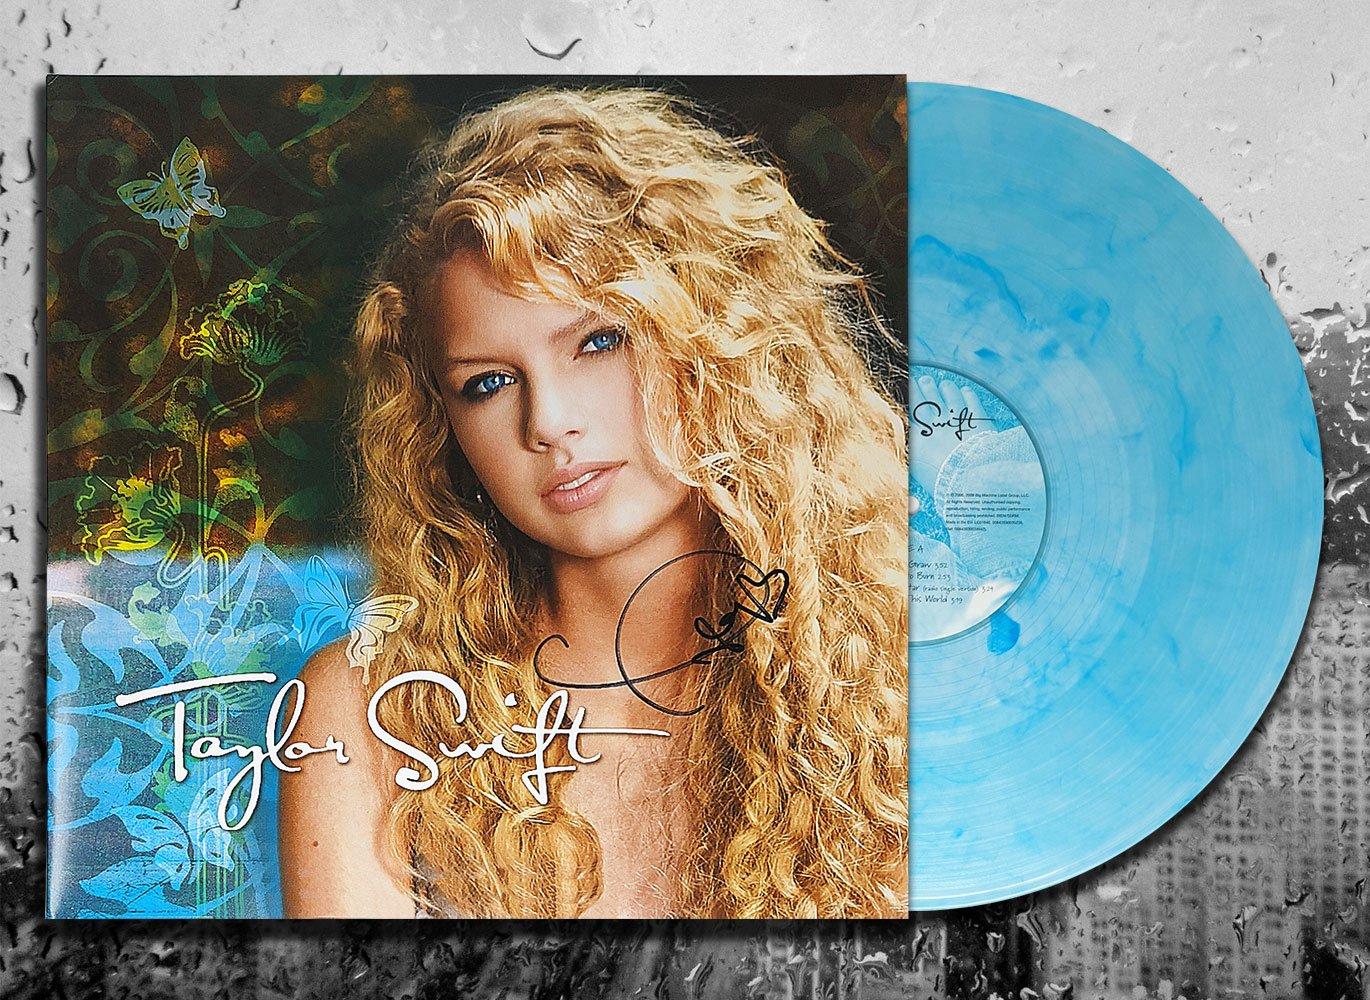 Taylor Swift's self-titled debut studio album vinyl